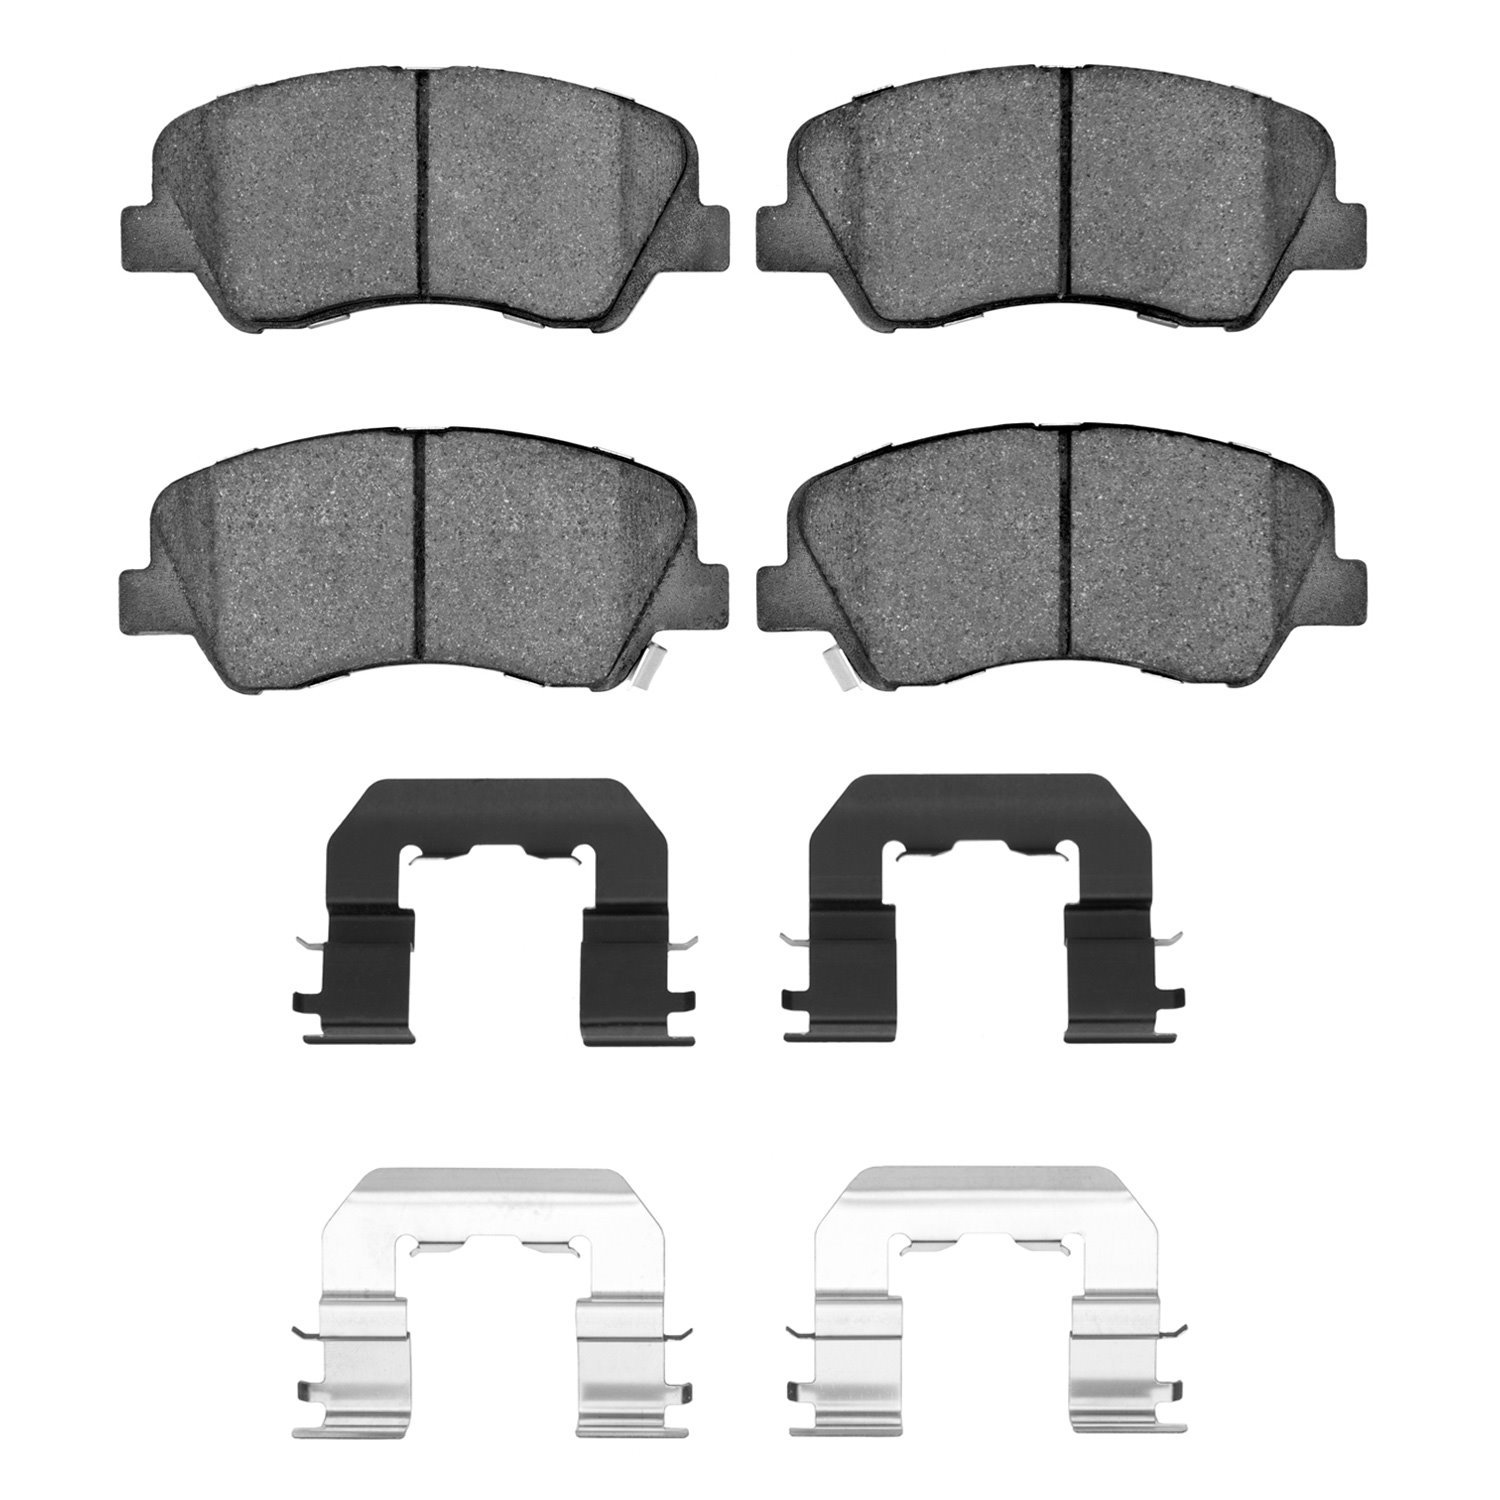 1551-1593-01 5000 Advanced Ceramic Brake Pads & Hardware Kit, 2012-2017 Multiple Makes/Models, Position: Front